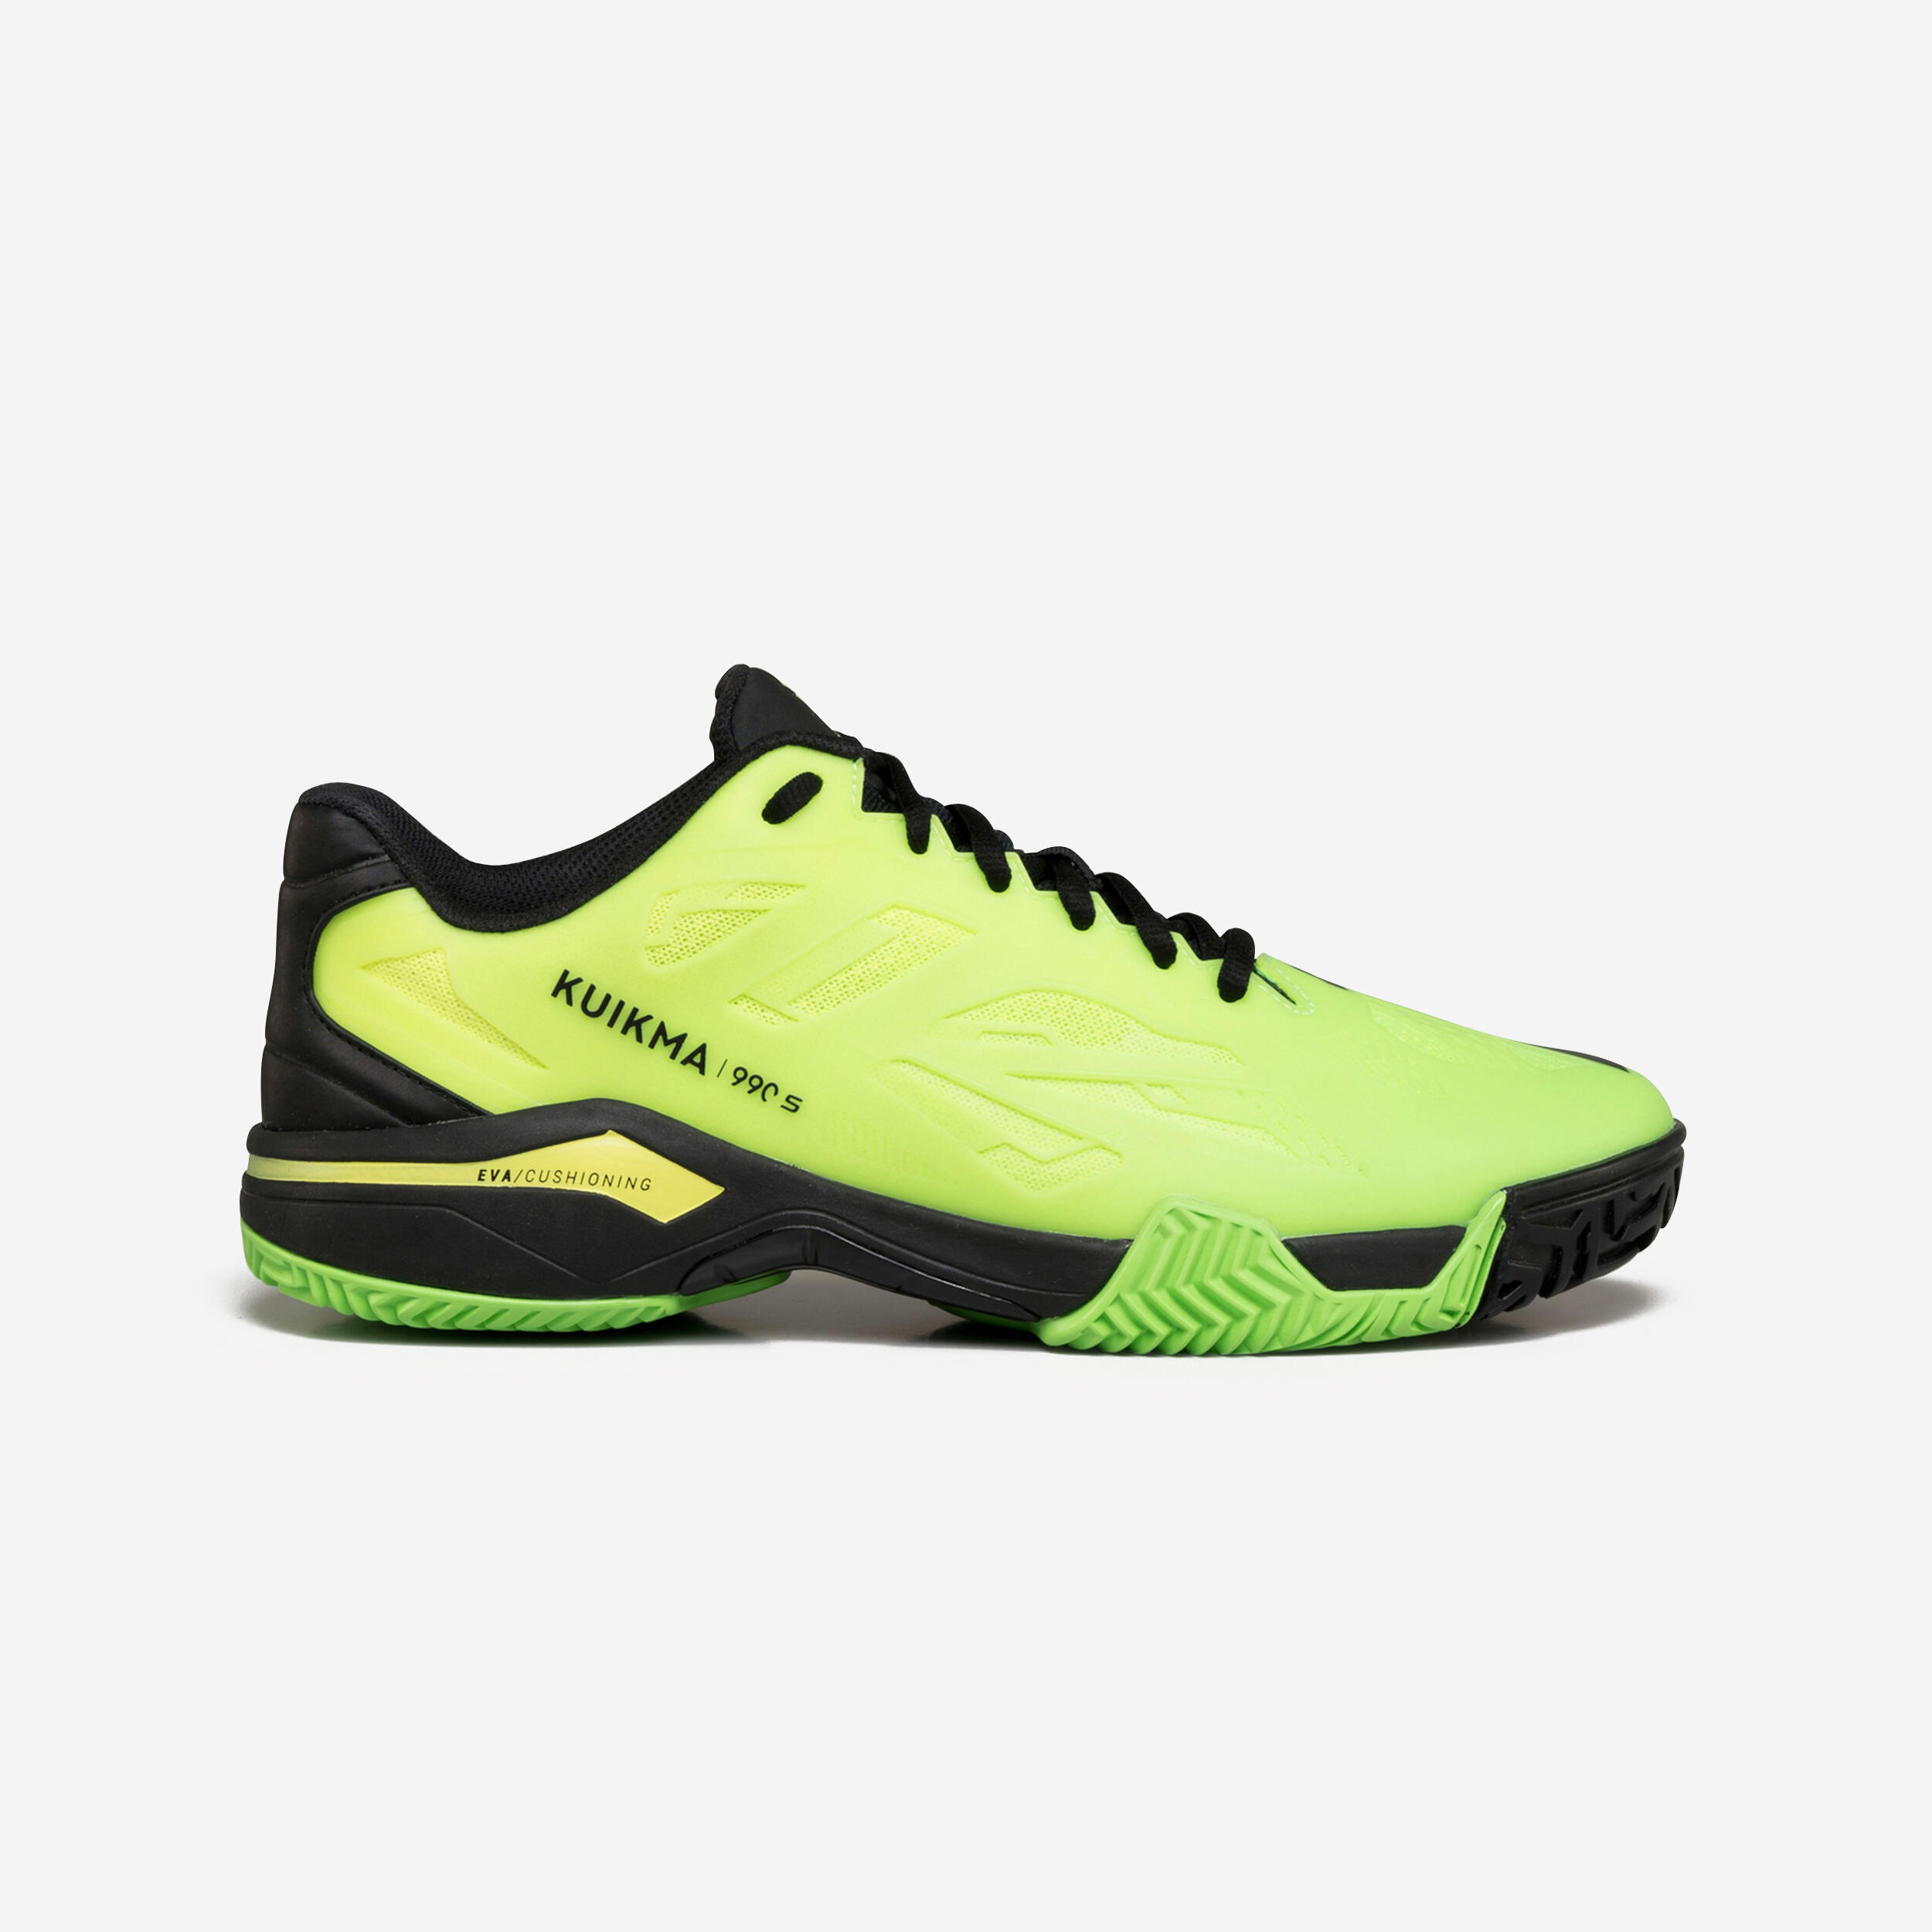 KUIKMA Men's Padel Shoes PS 990 Stability - Yellow